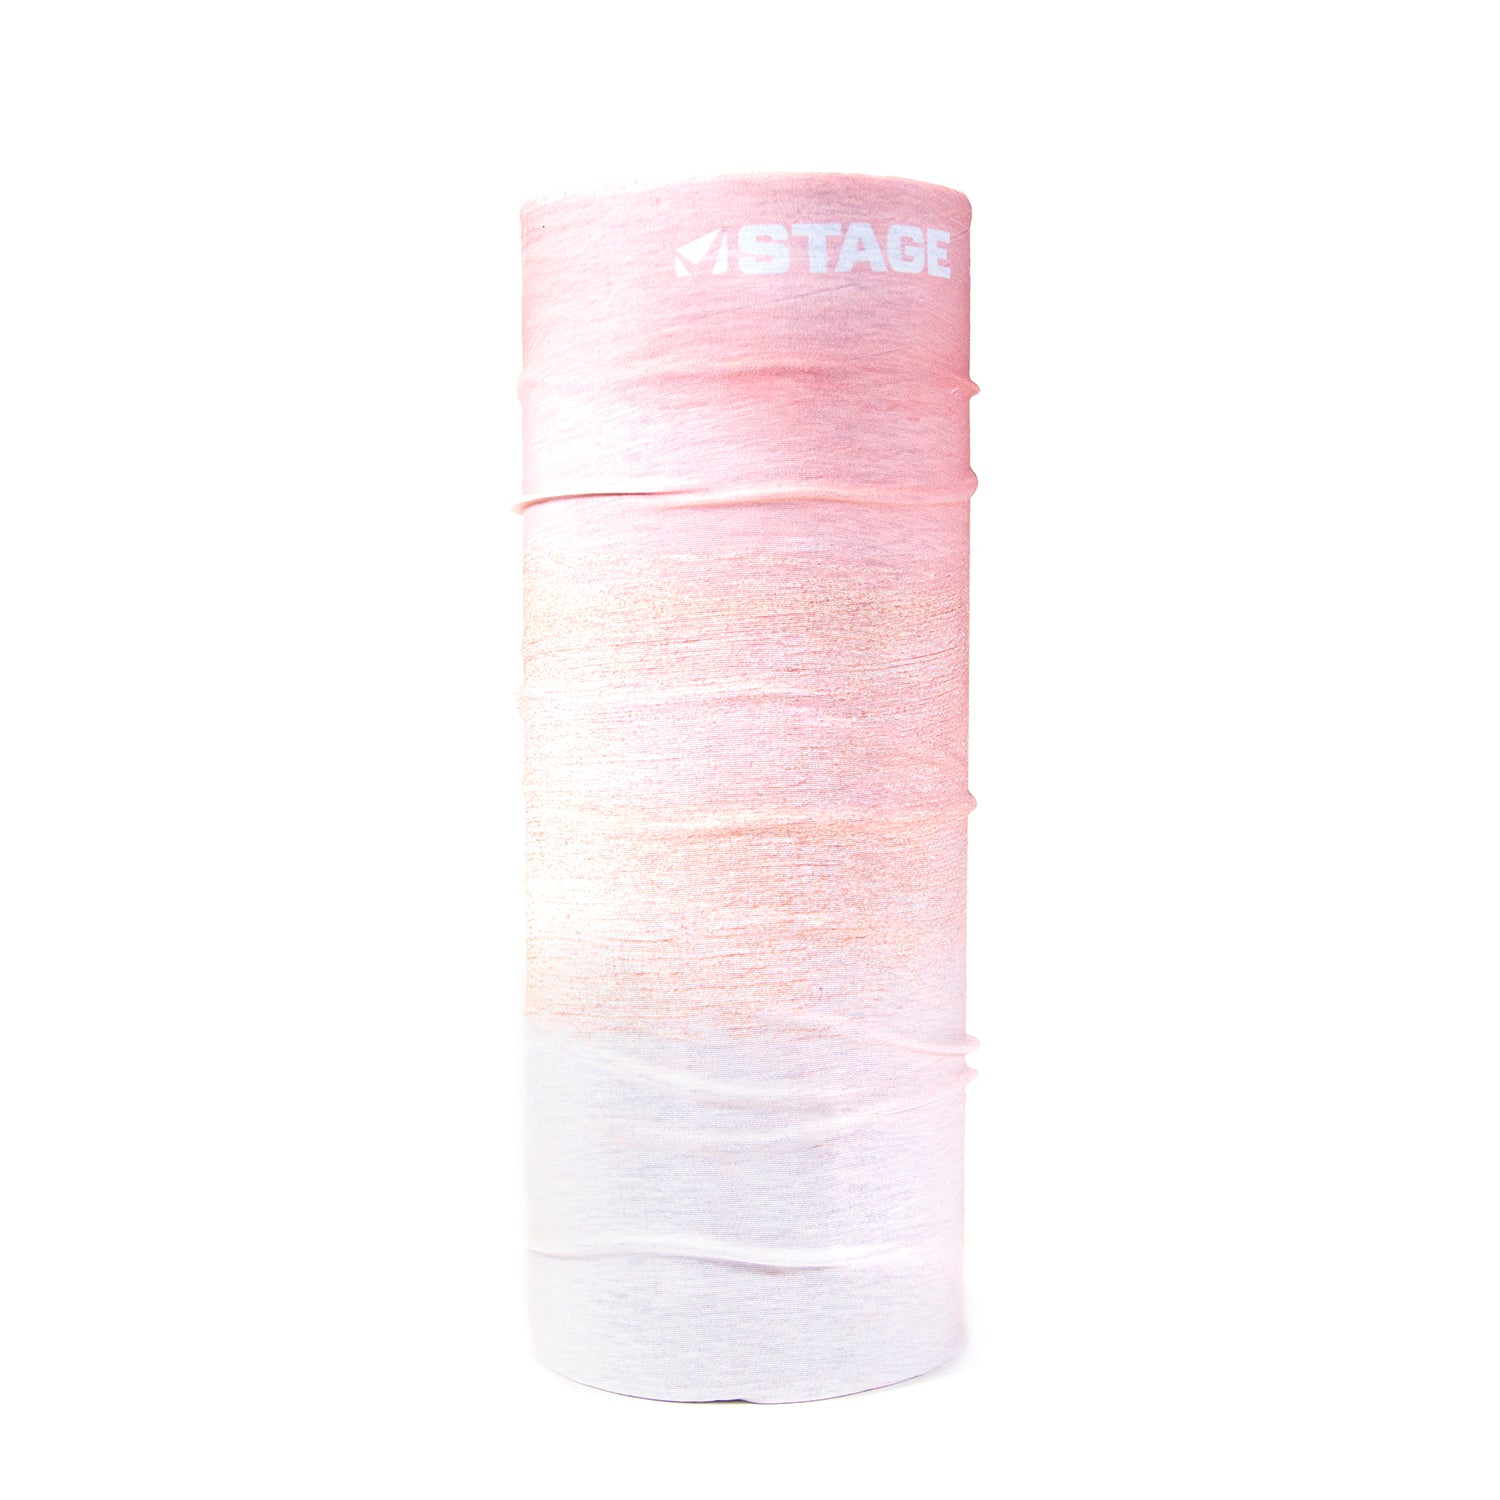 Face Tube - Pink Brush - Single Layer